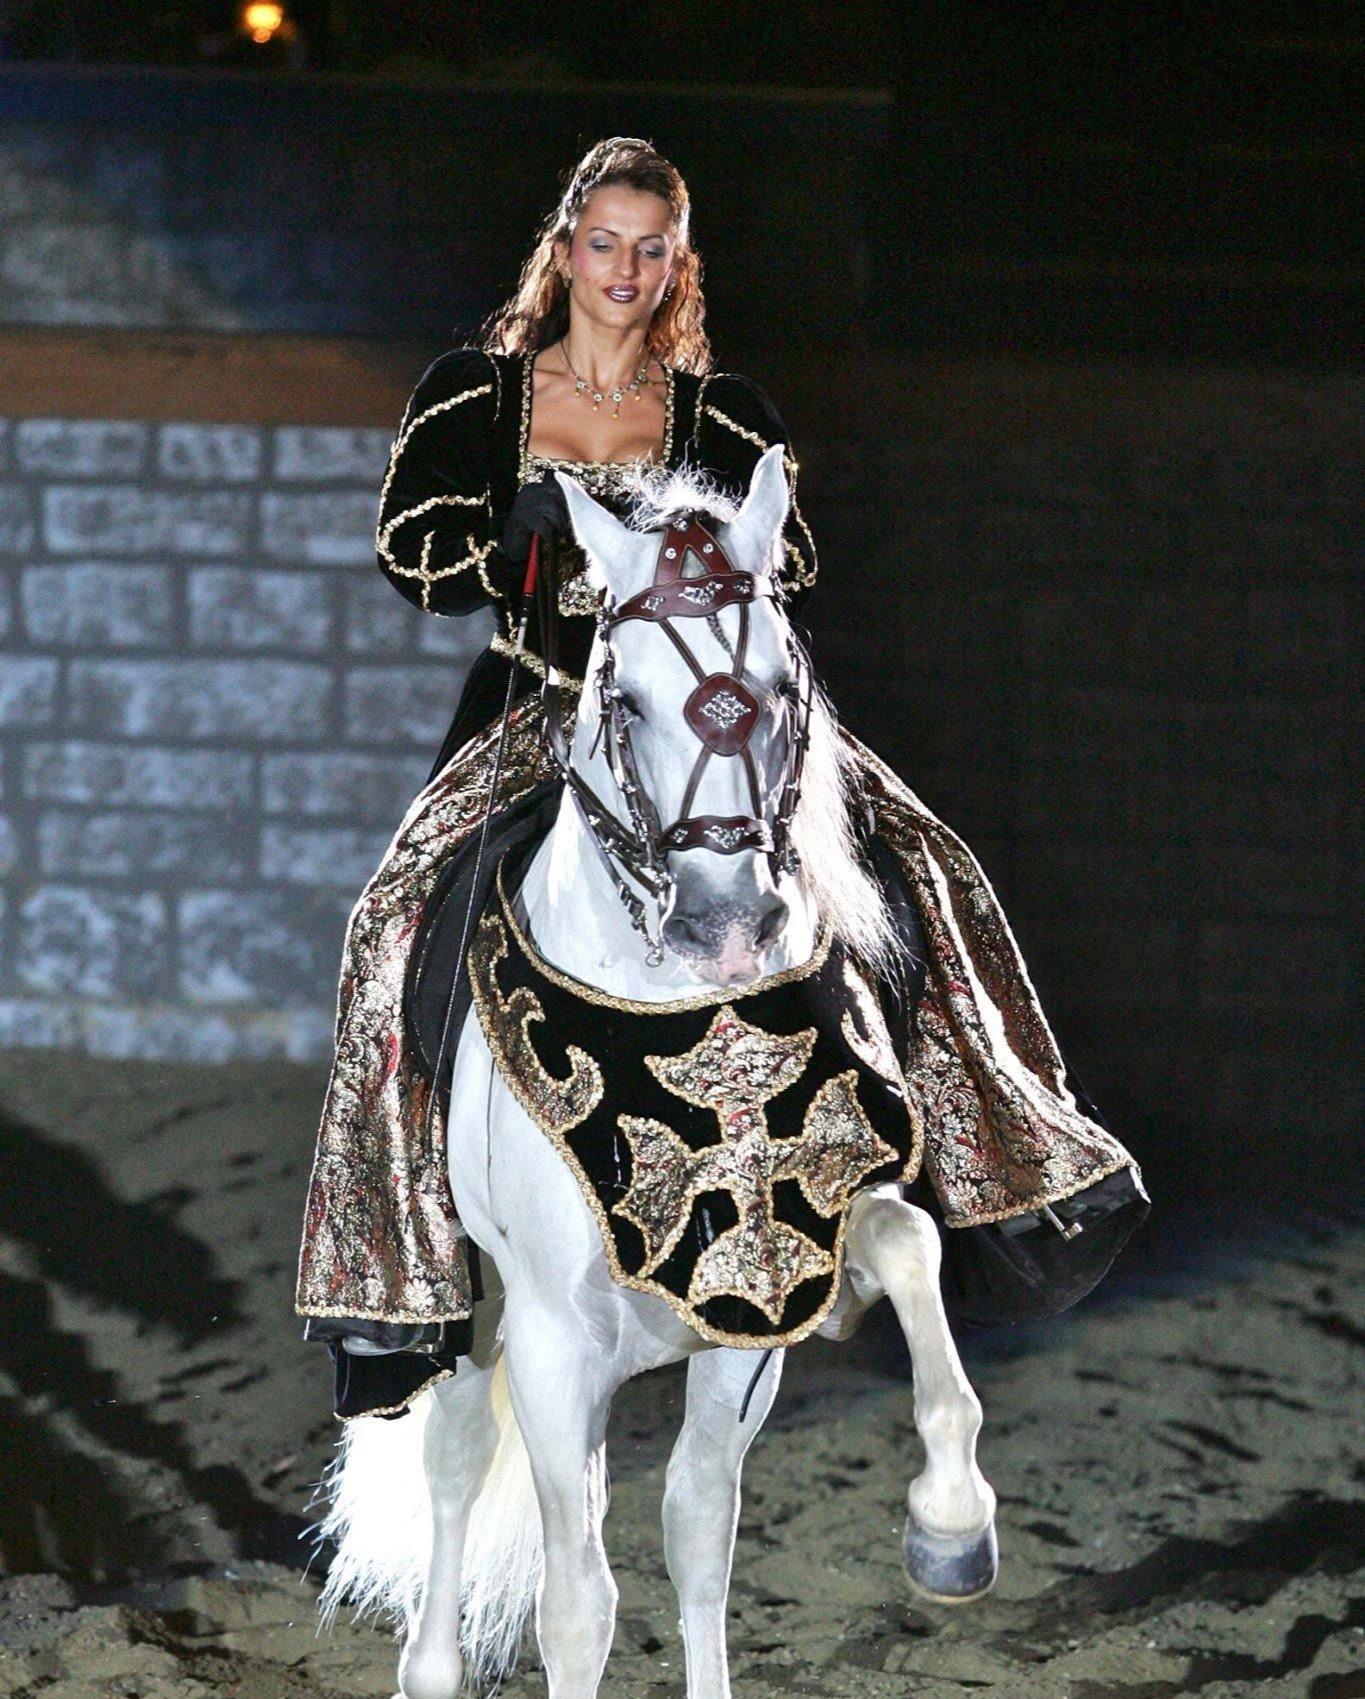 Equestrian Dressage